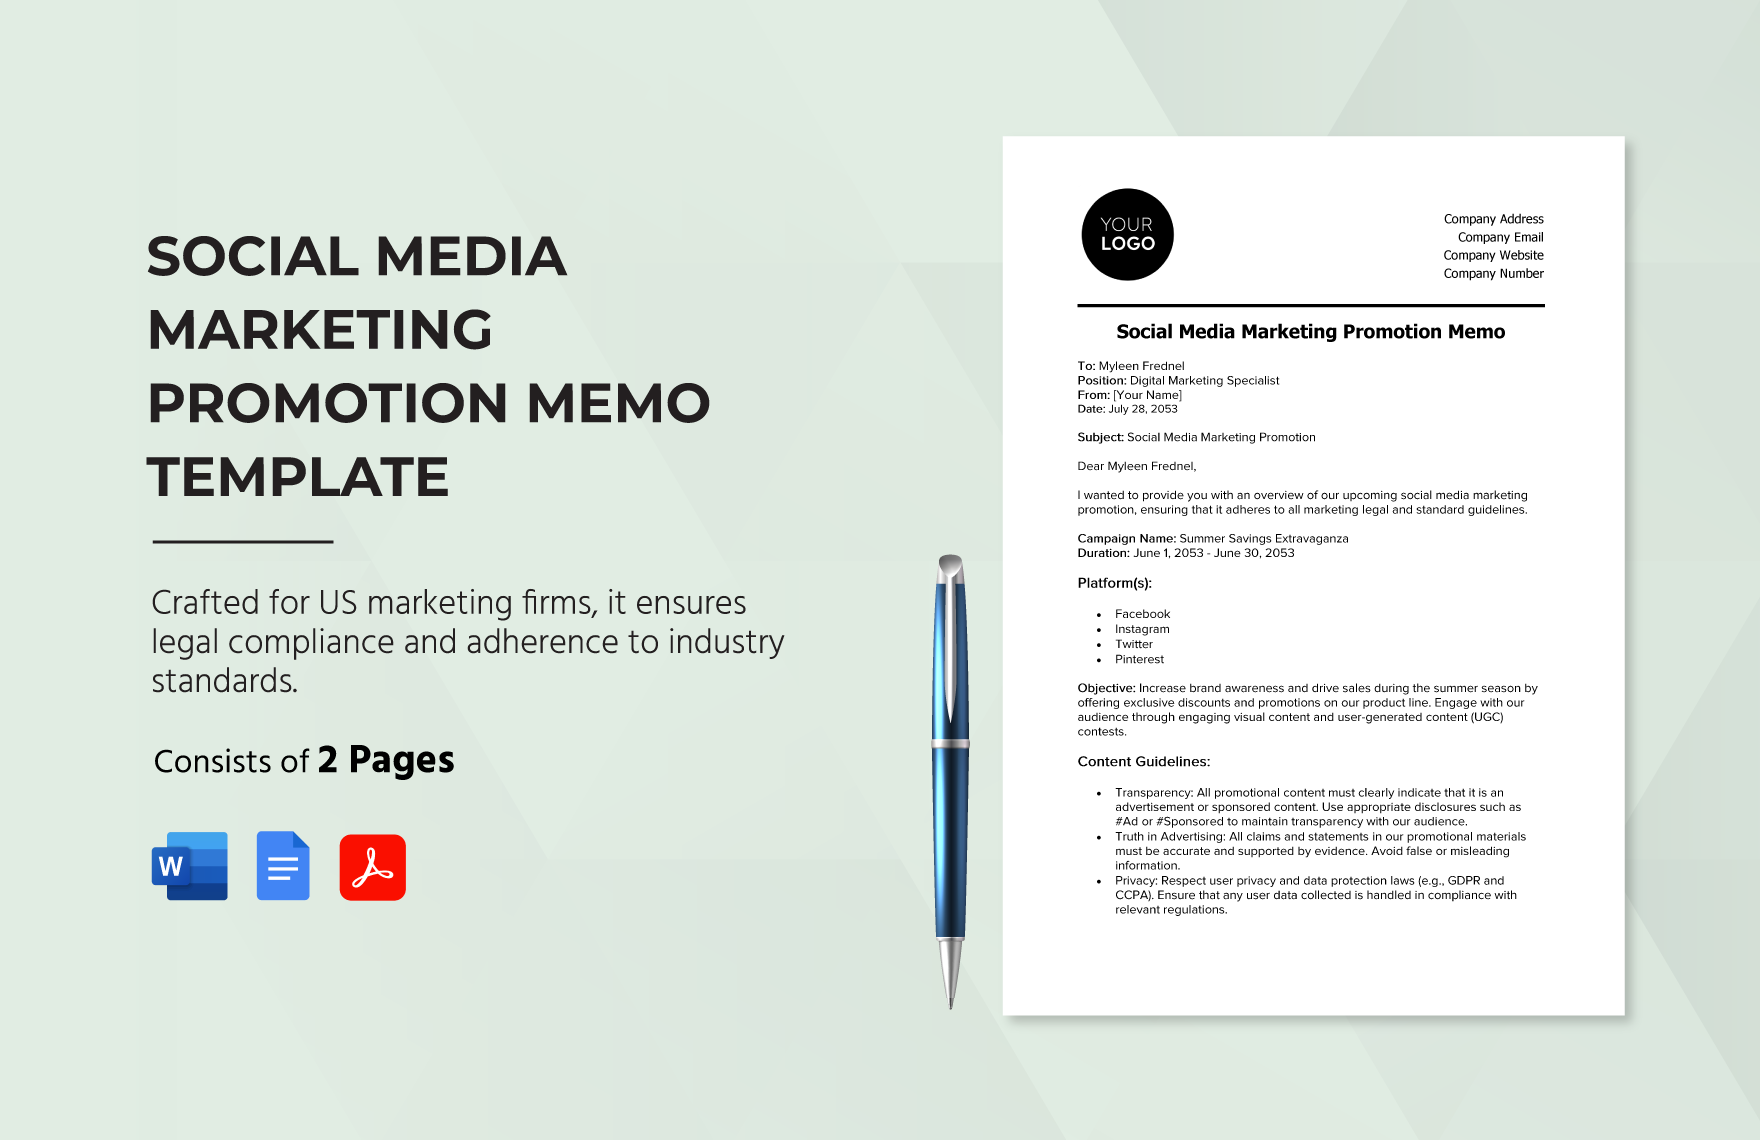 Social Media Marketing Promotion Memo Template in Word, Google Docs, PDF